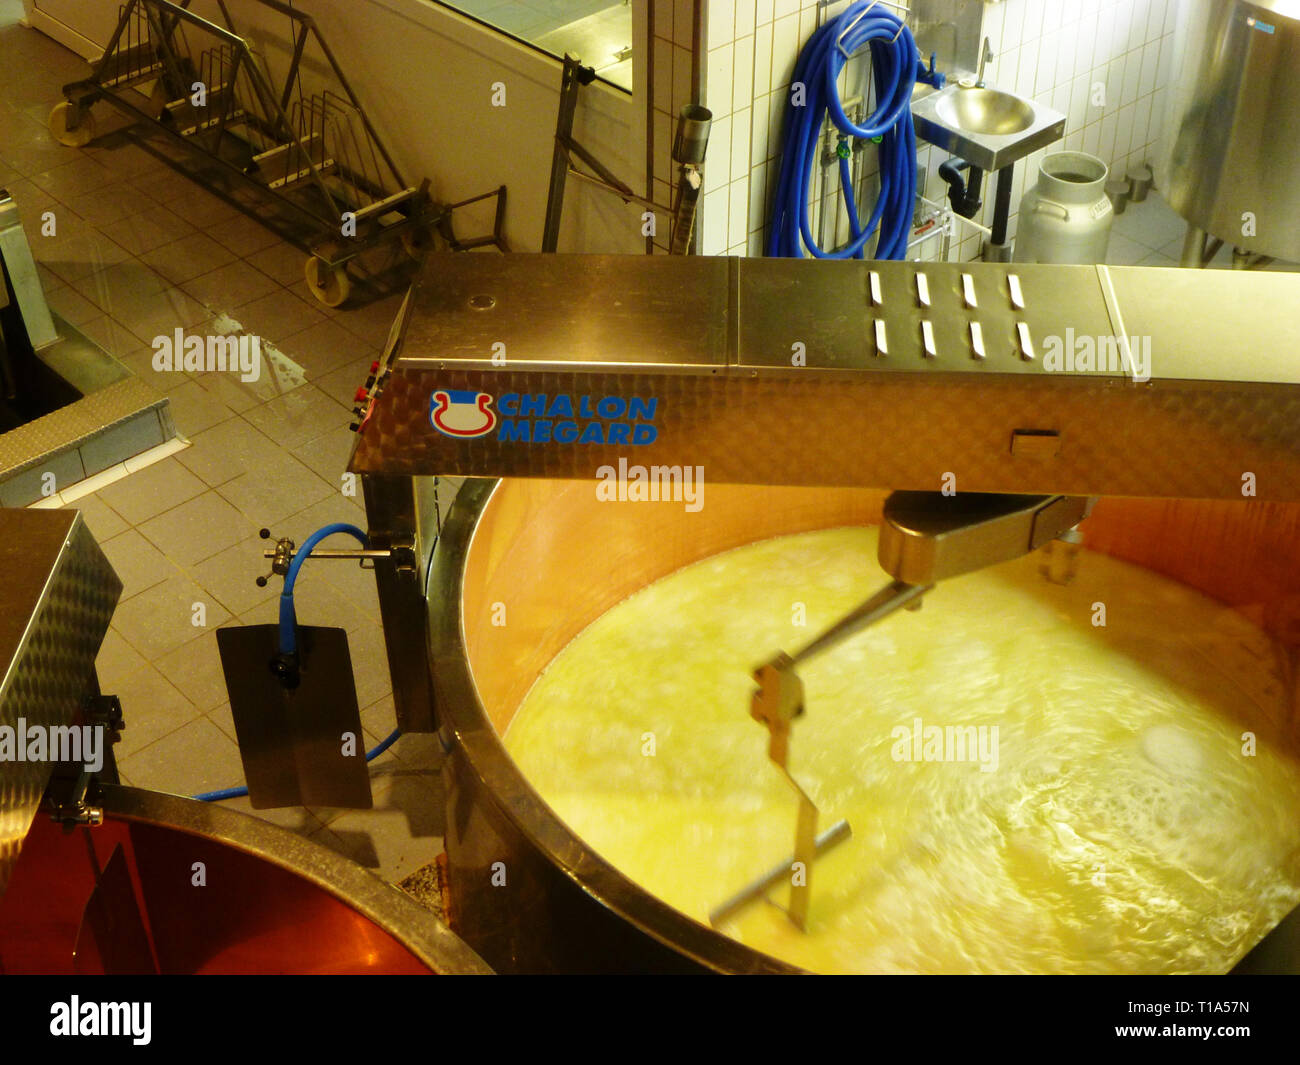 Gruyere, Swiss, 2012 -La maison du Gruyere - cooper tank with cheese in fabrication Stock Photo